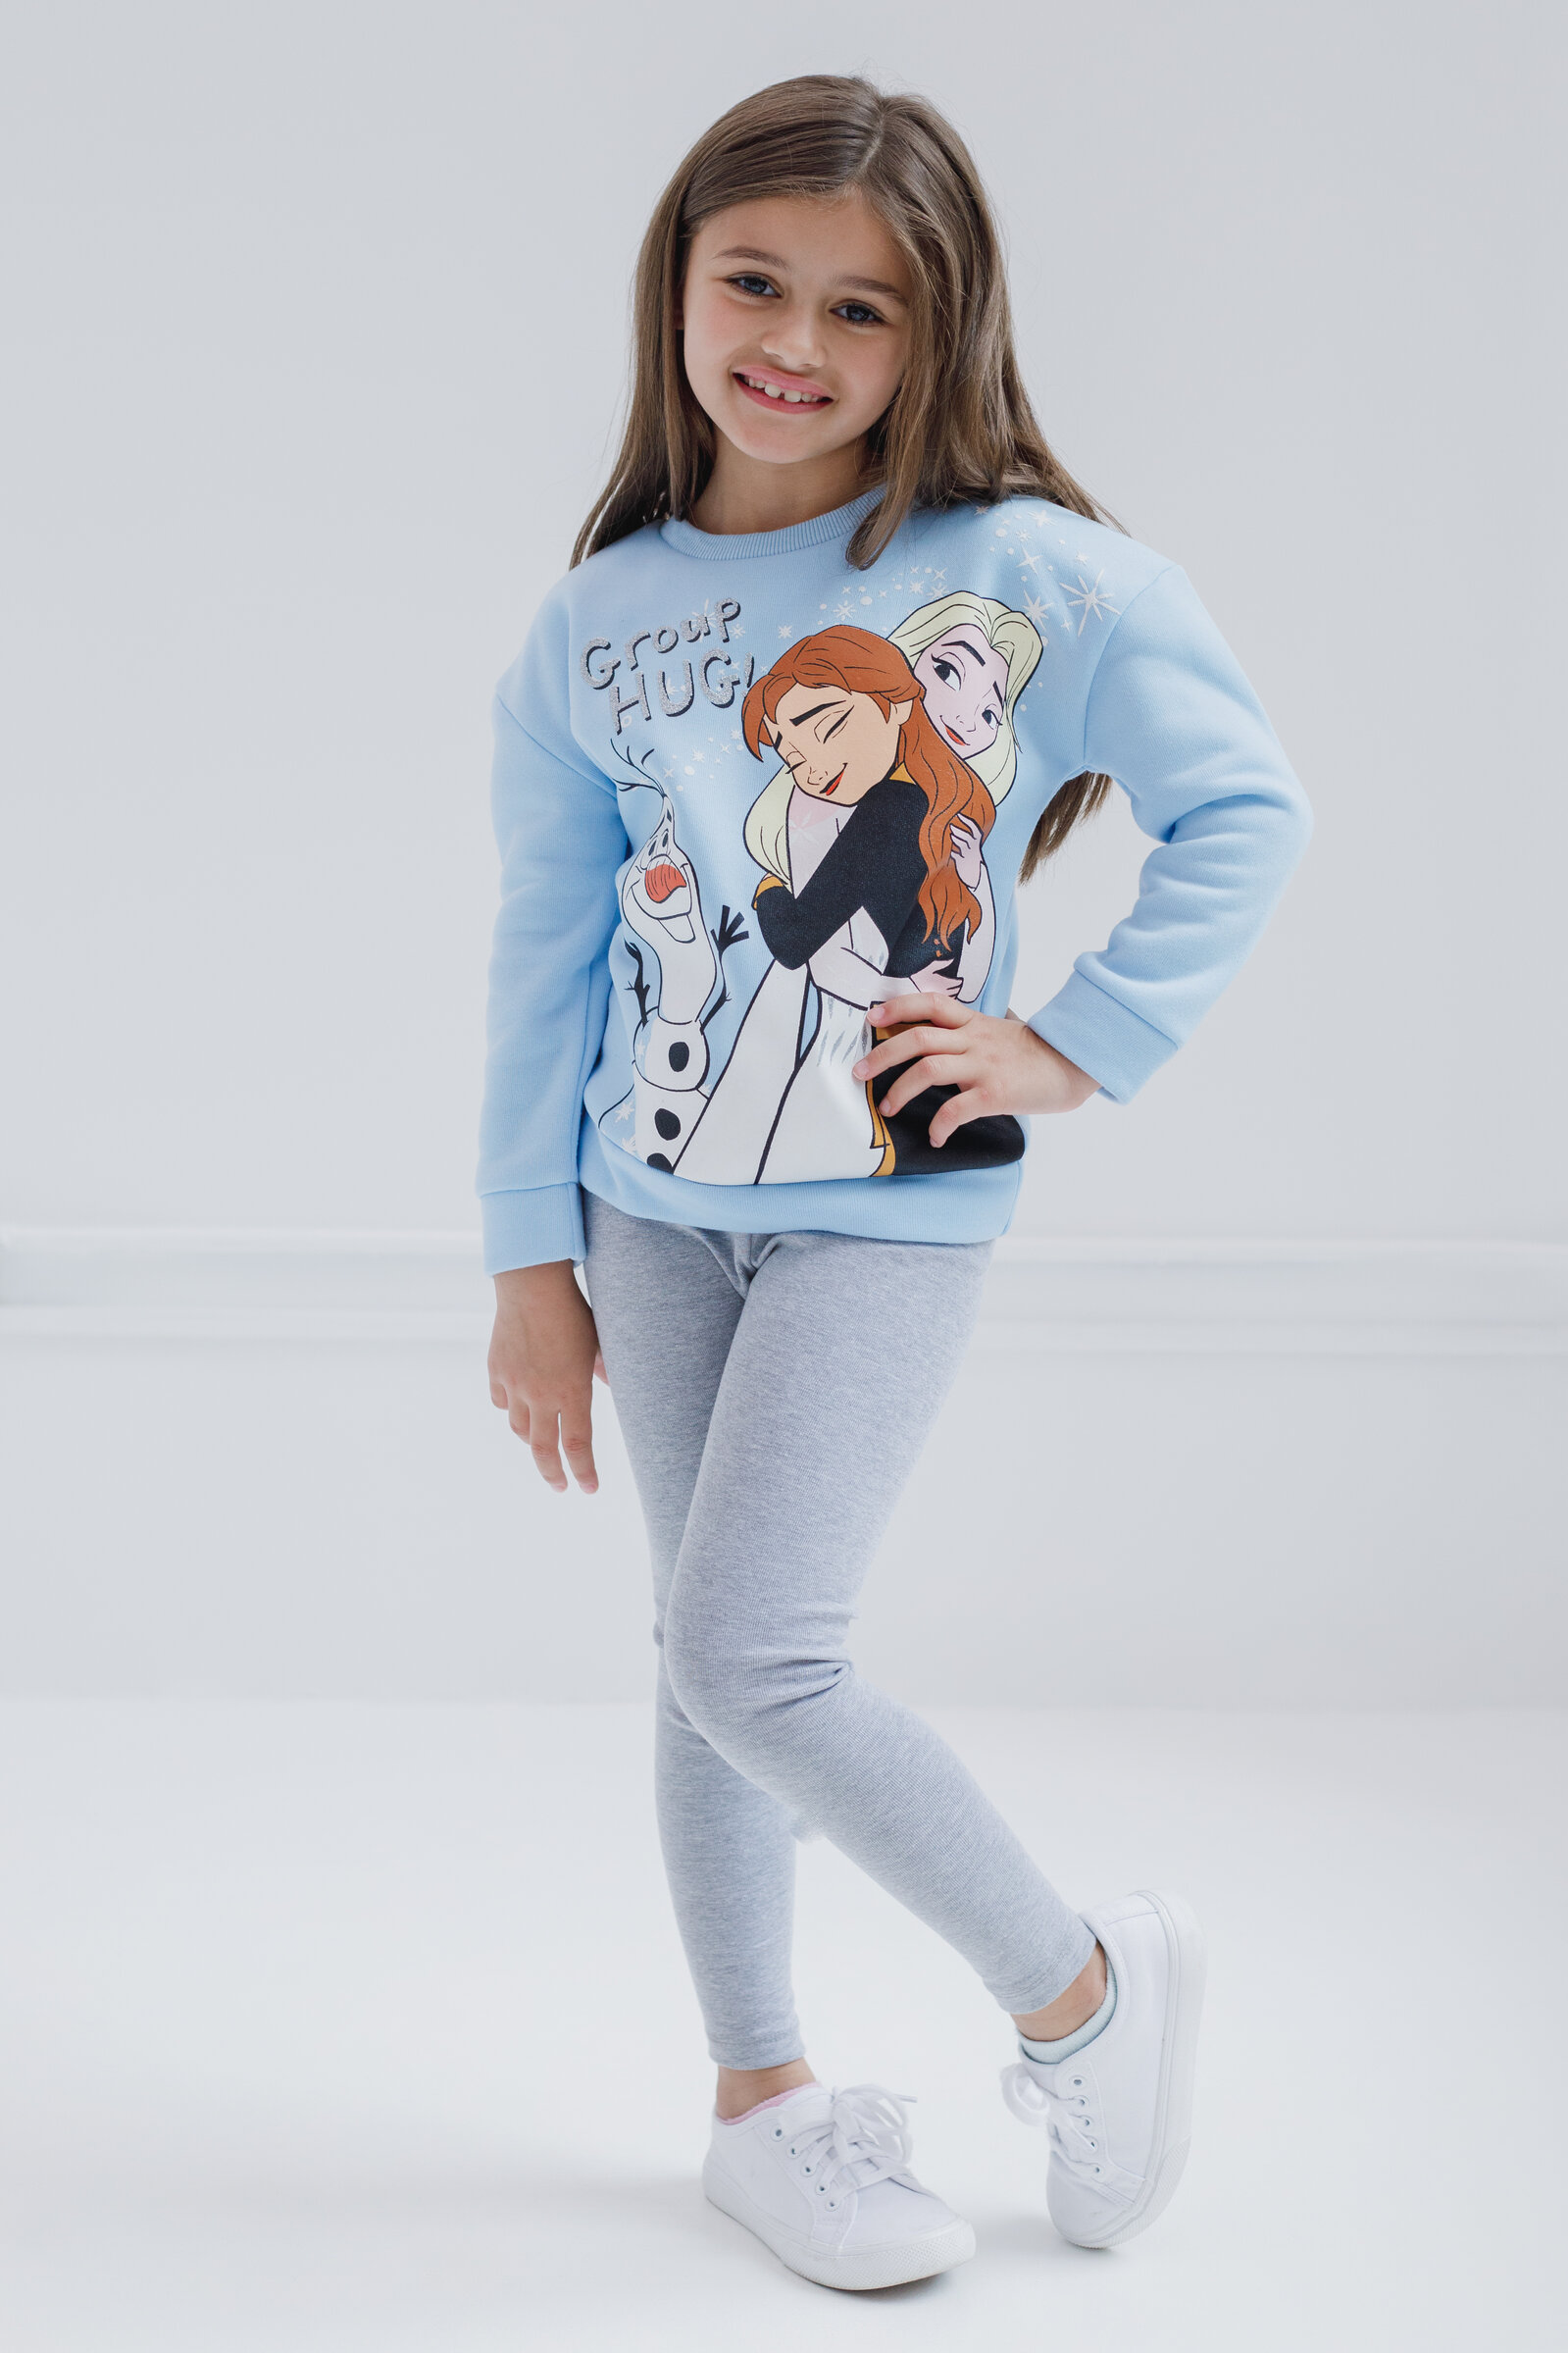 Disney Frozen Elsa Princess Anna Olaf Toddler Girls Pullover Fleece Sweatshirt and Leggings Outfit Set Toddler to Little Kid - image 2 of 5